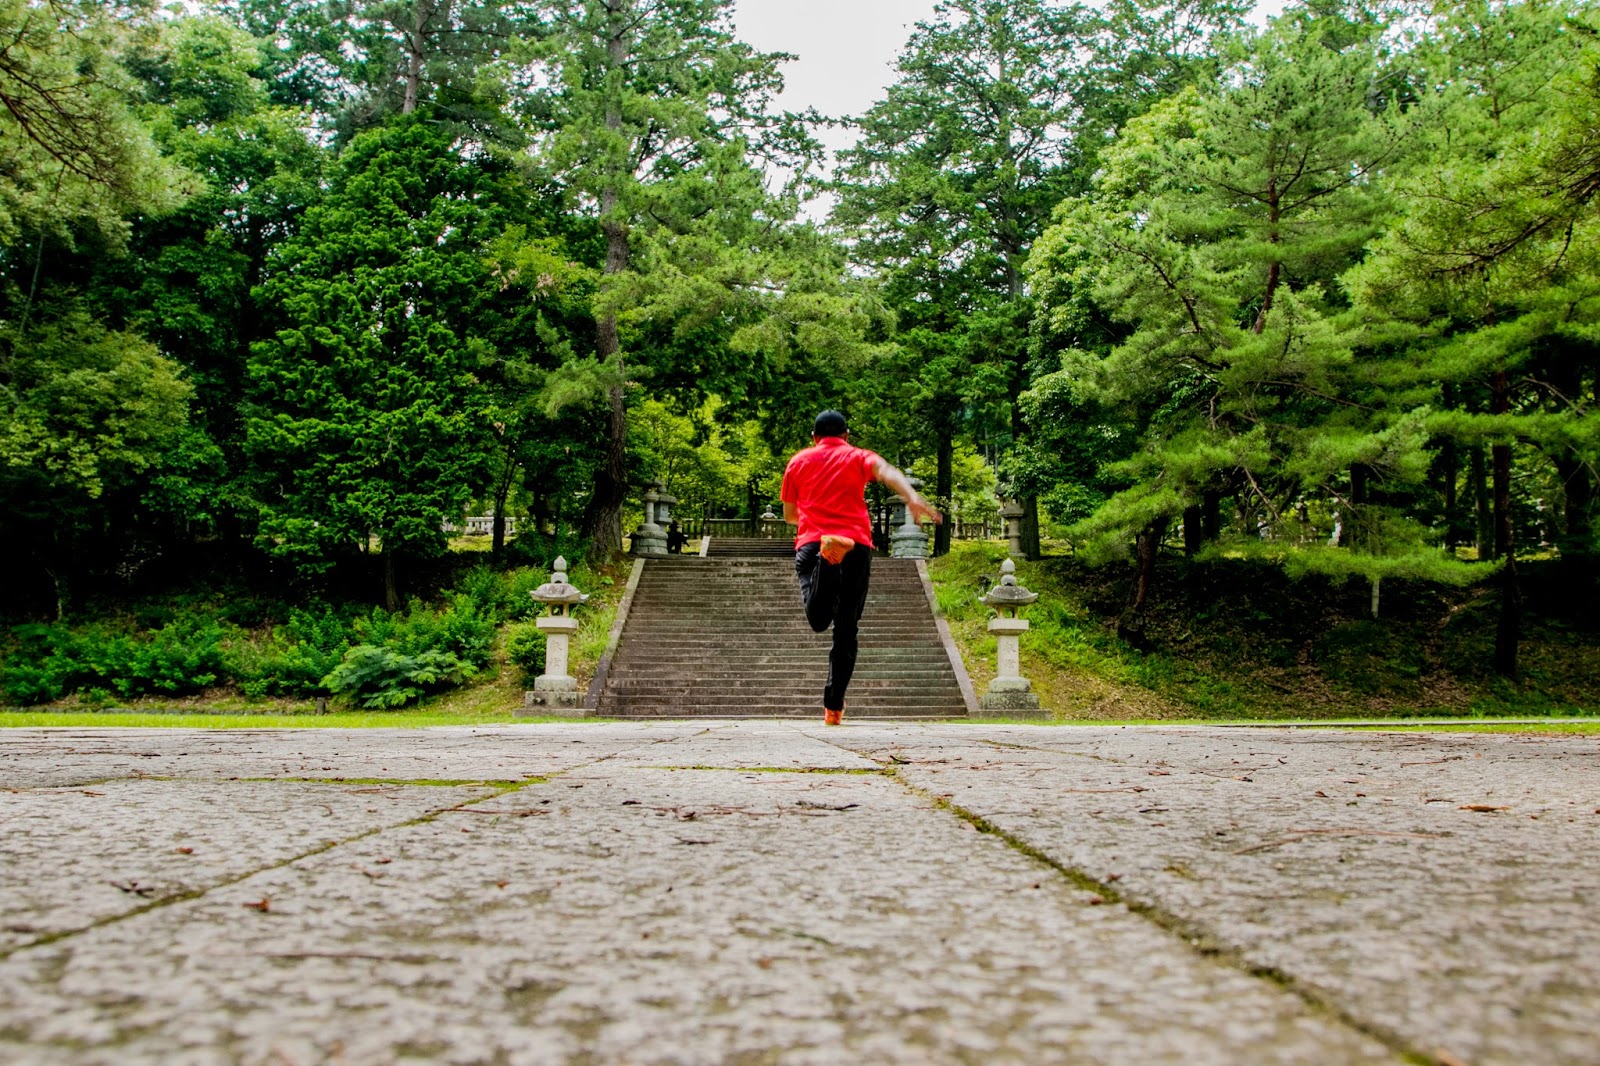 Run撮り Running From Camera 634 山口市 香山公園毛利家墓所前 うぐいす張りの石畳